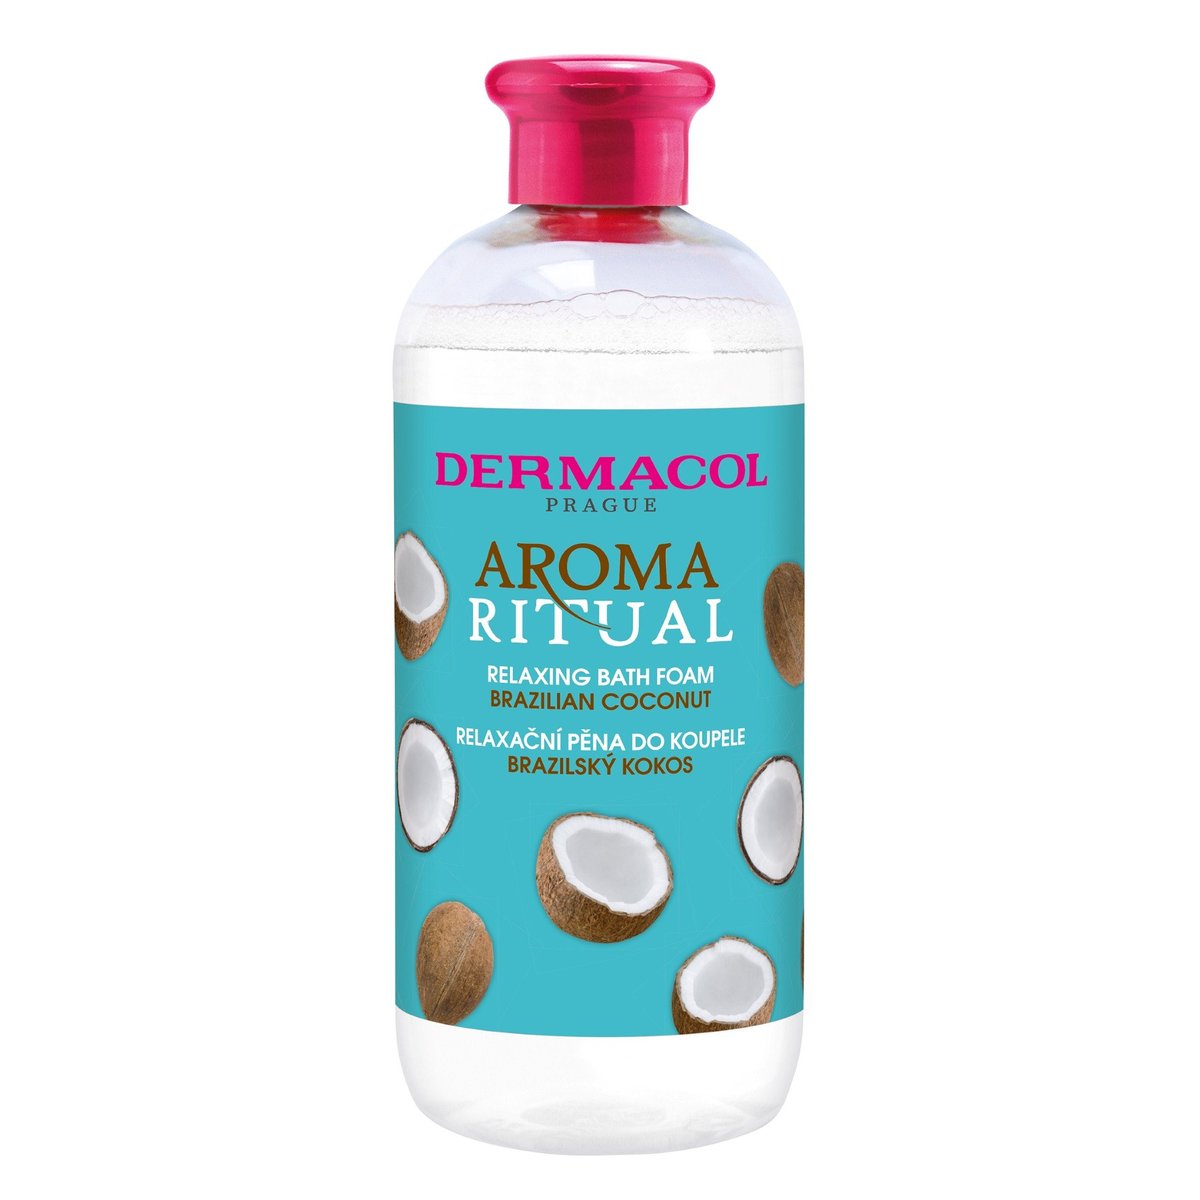 Dermacol Aroma Ritual – pěna do koupele brazilský kokos